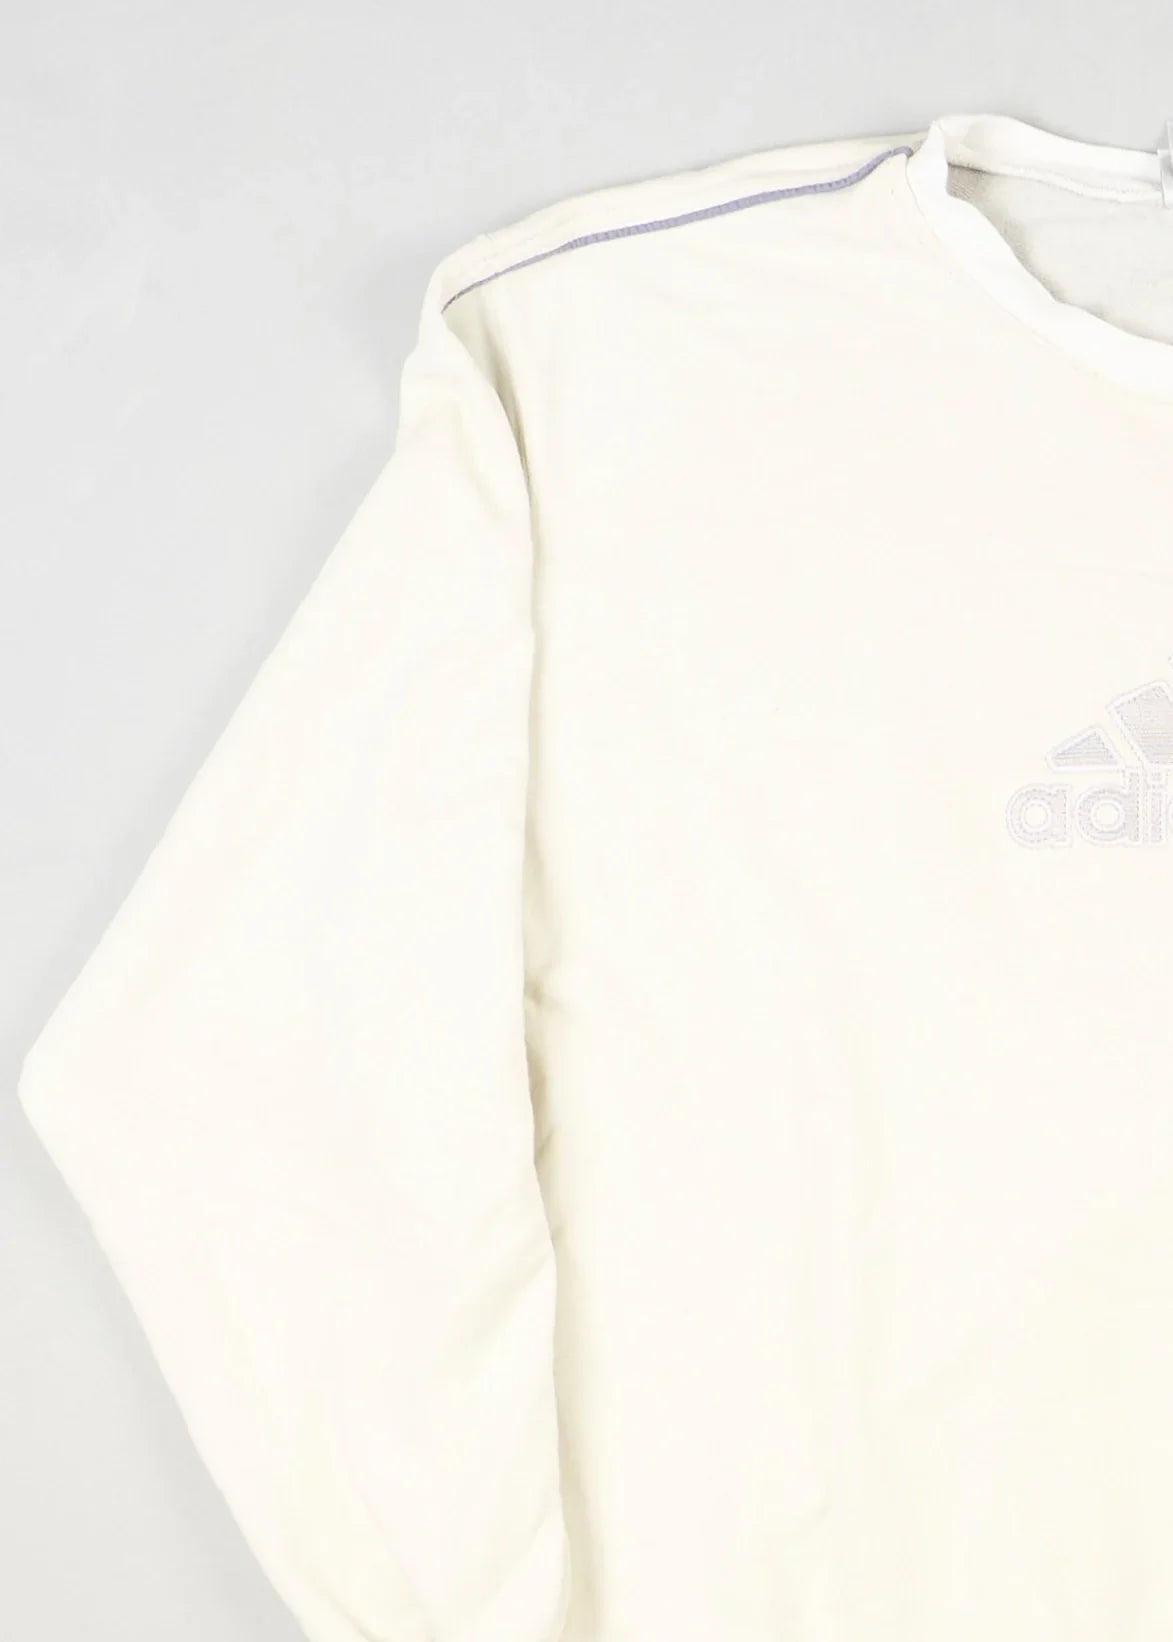 Adidas - Sweatshirt (L) Left